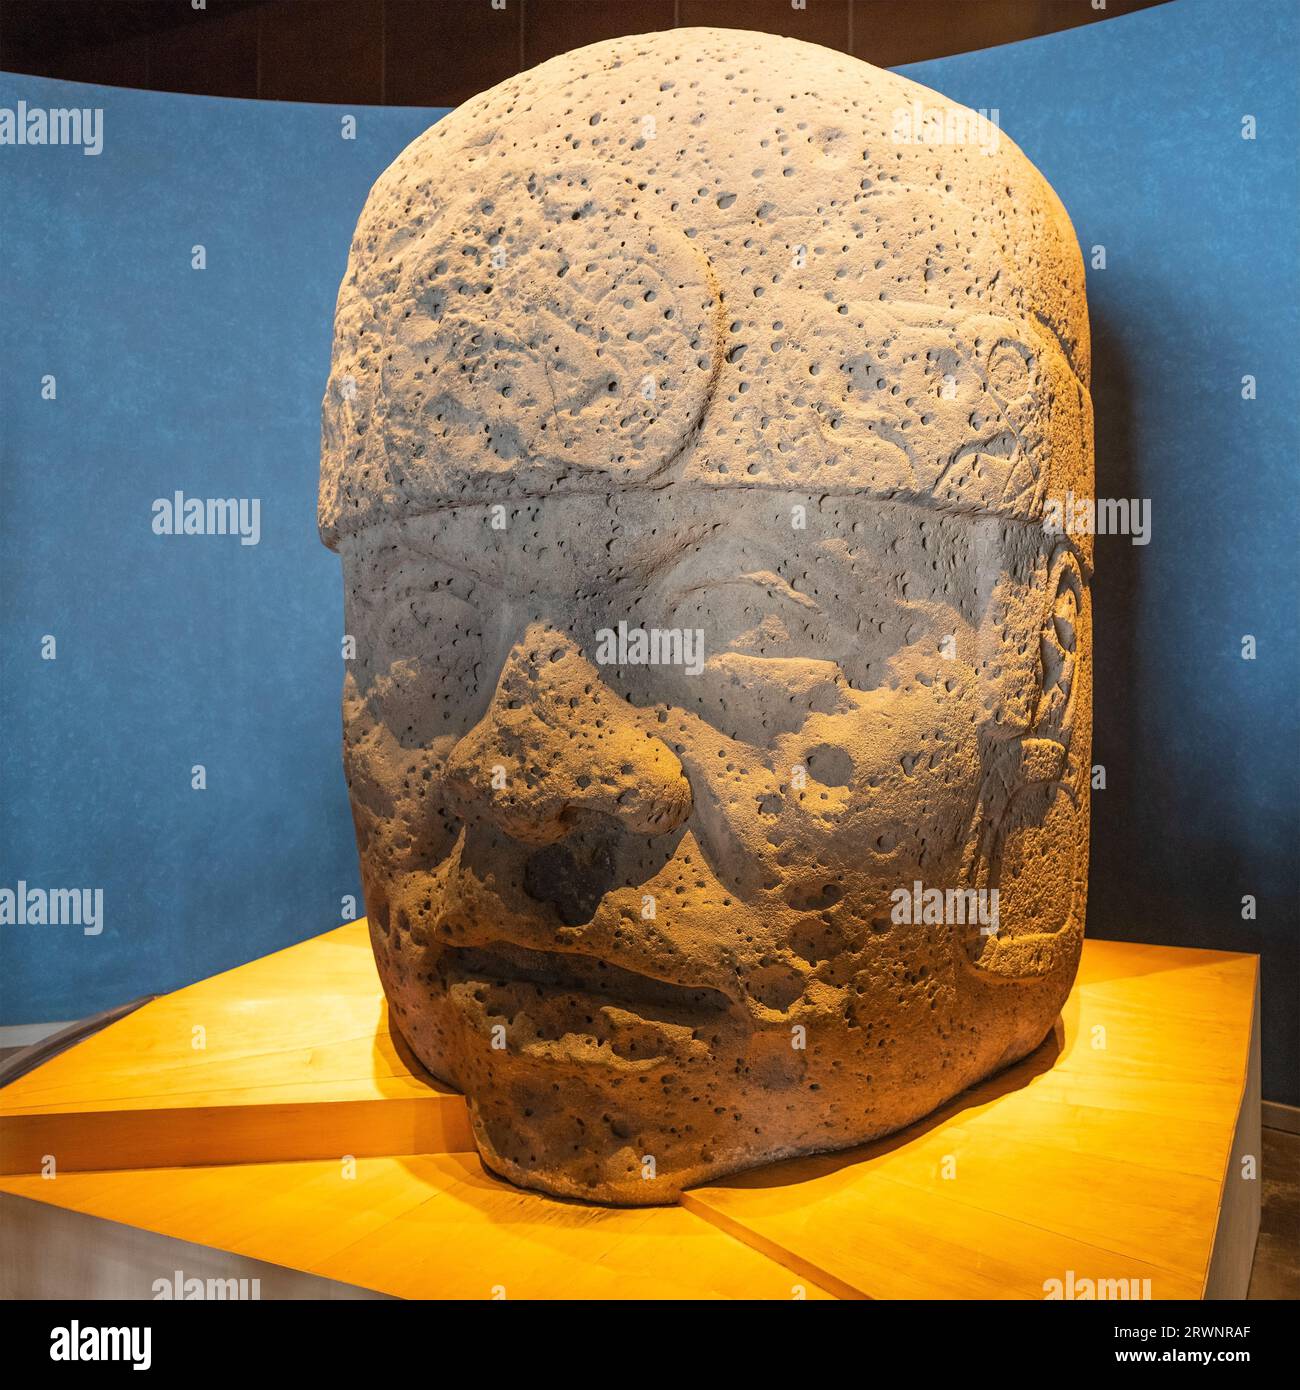 Olmec colossal head carving made by the Olmec civilization, Mexico City, Mexico. Stock Photo